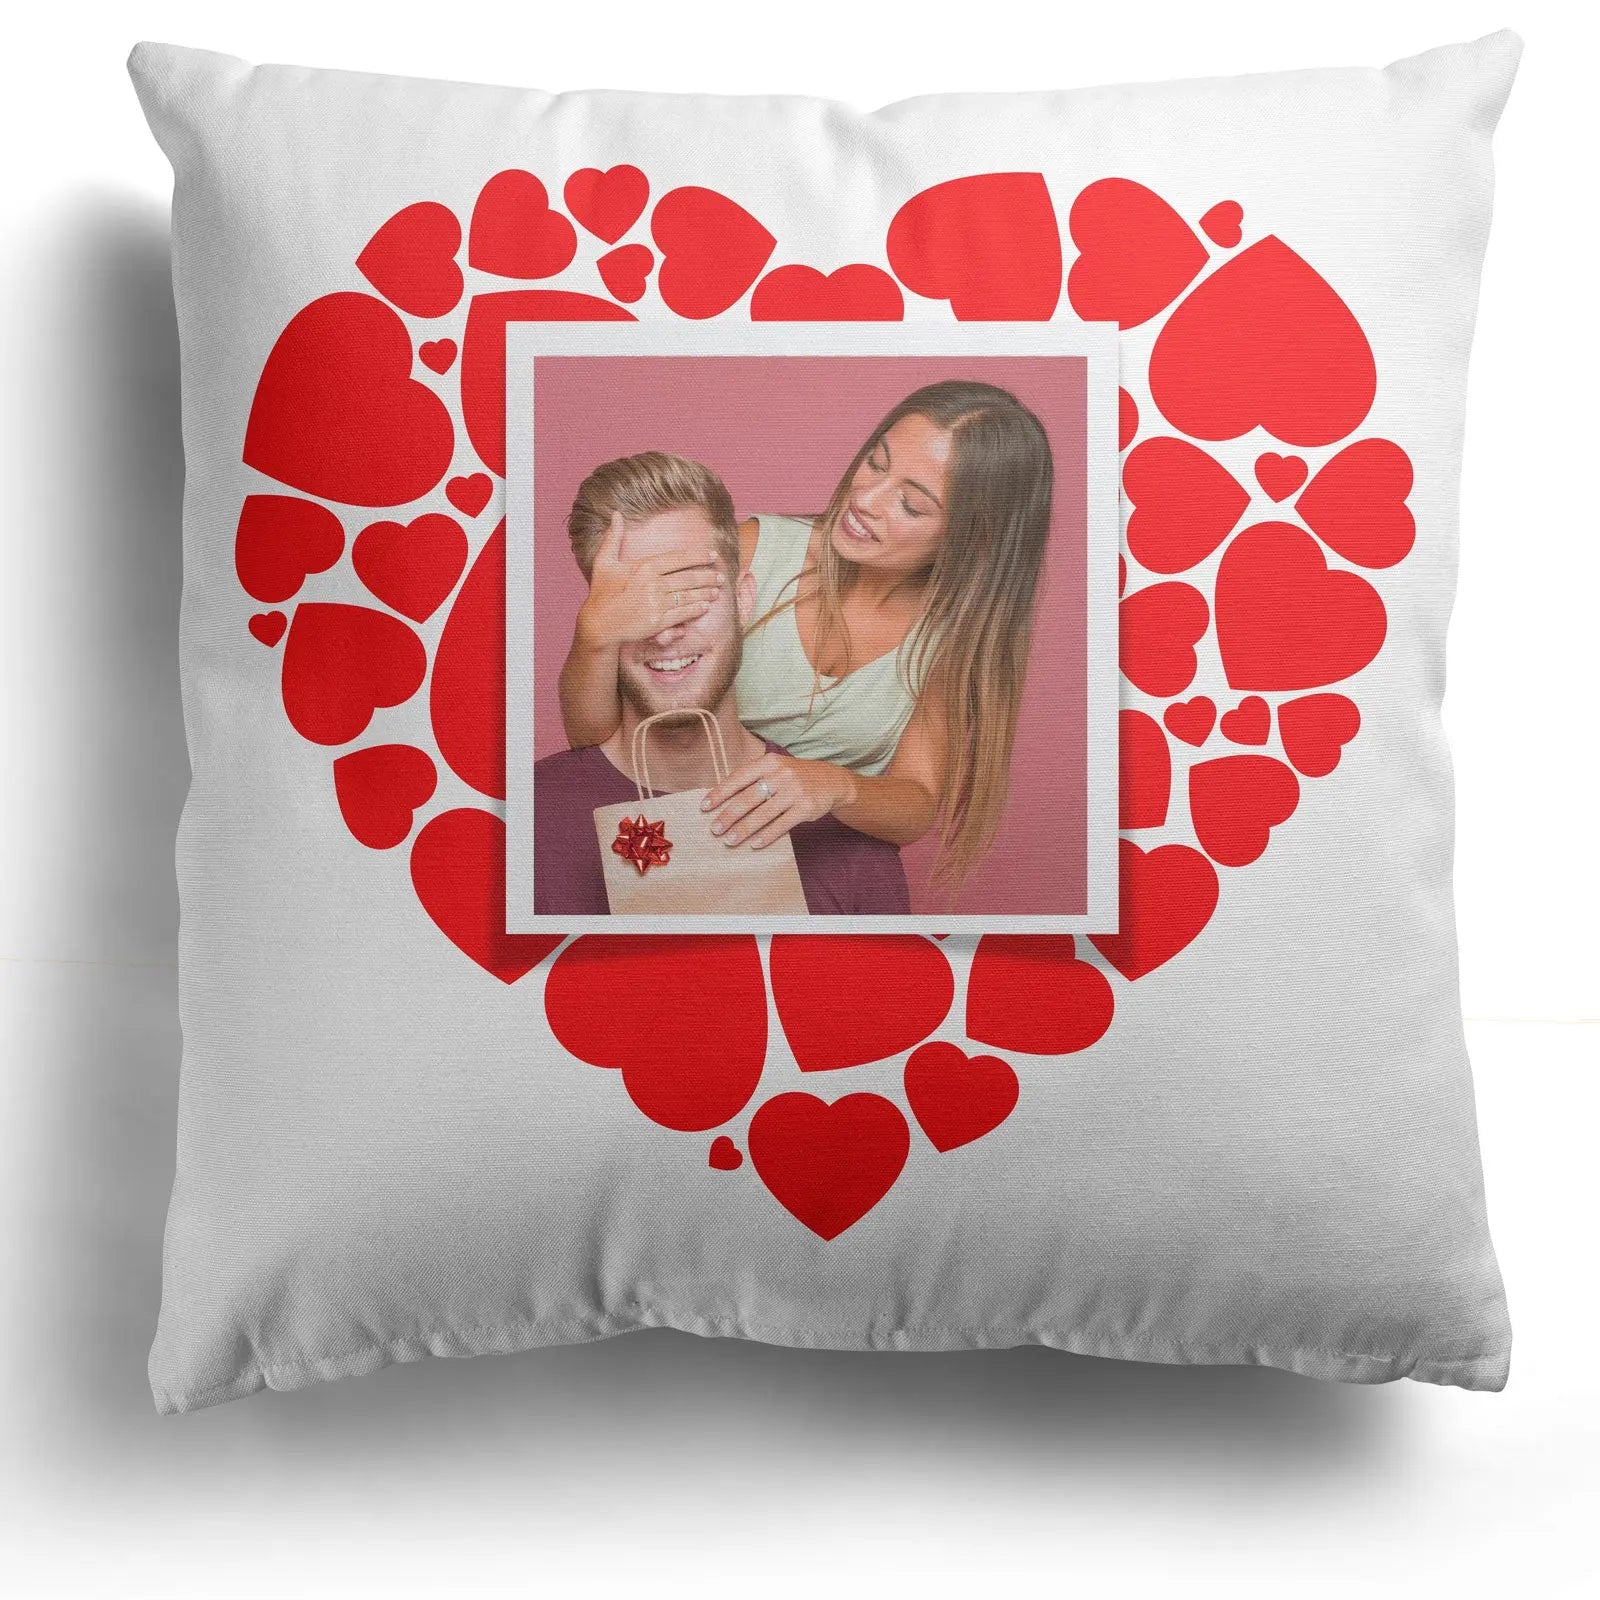 Personalised Cushion  Valentines Day  Couples & Romance  40x40cm  1 Image  Heart - CushionPop